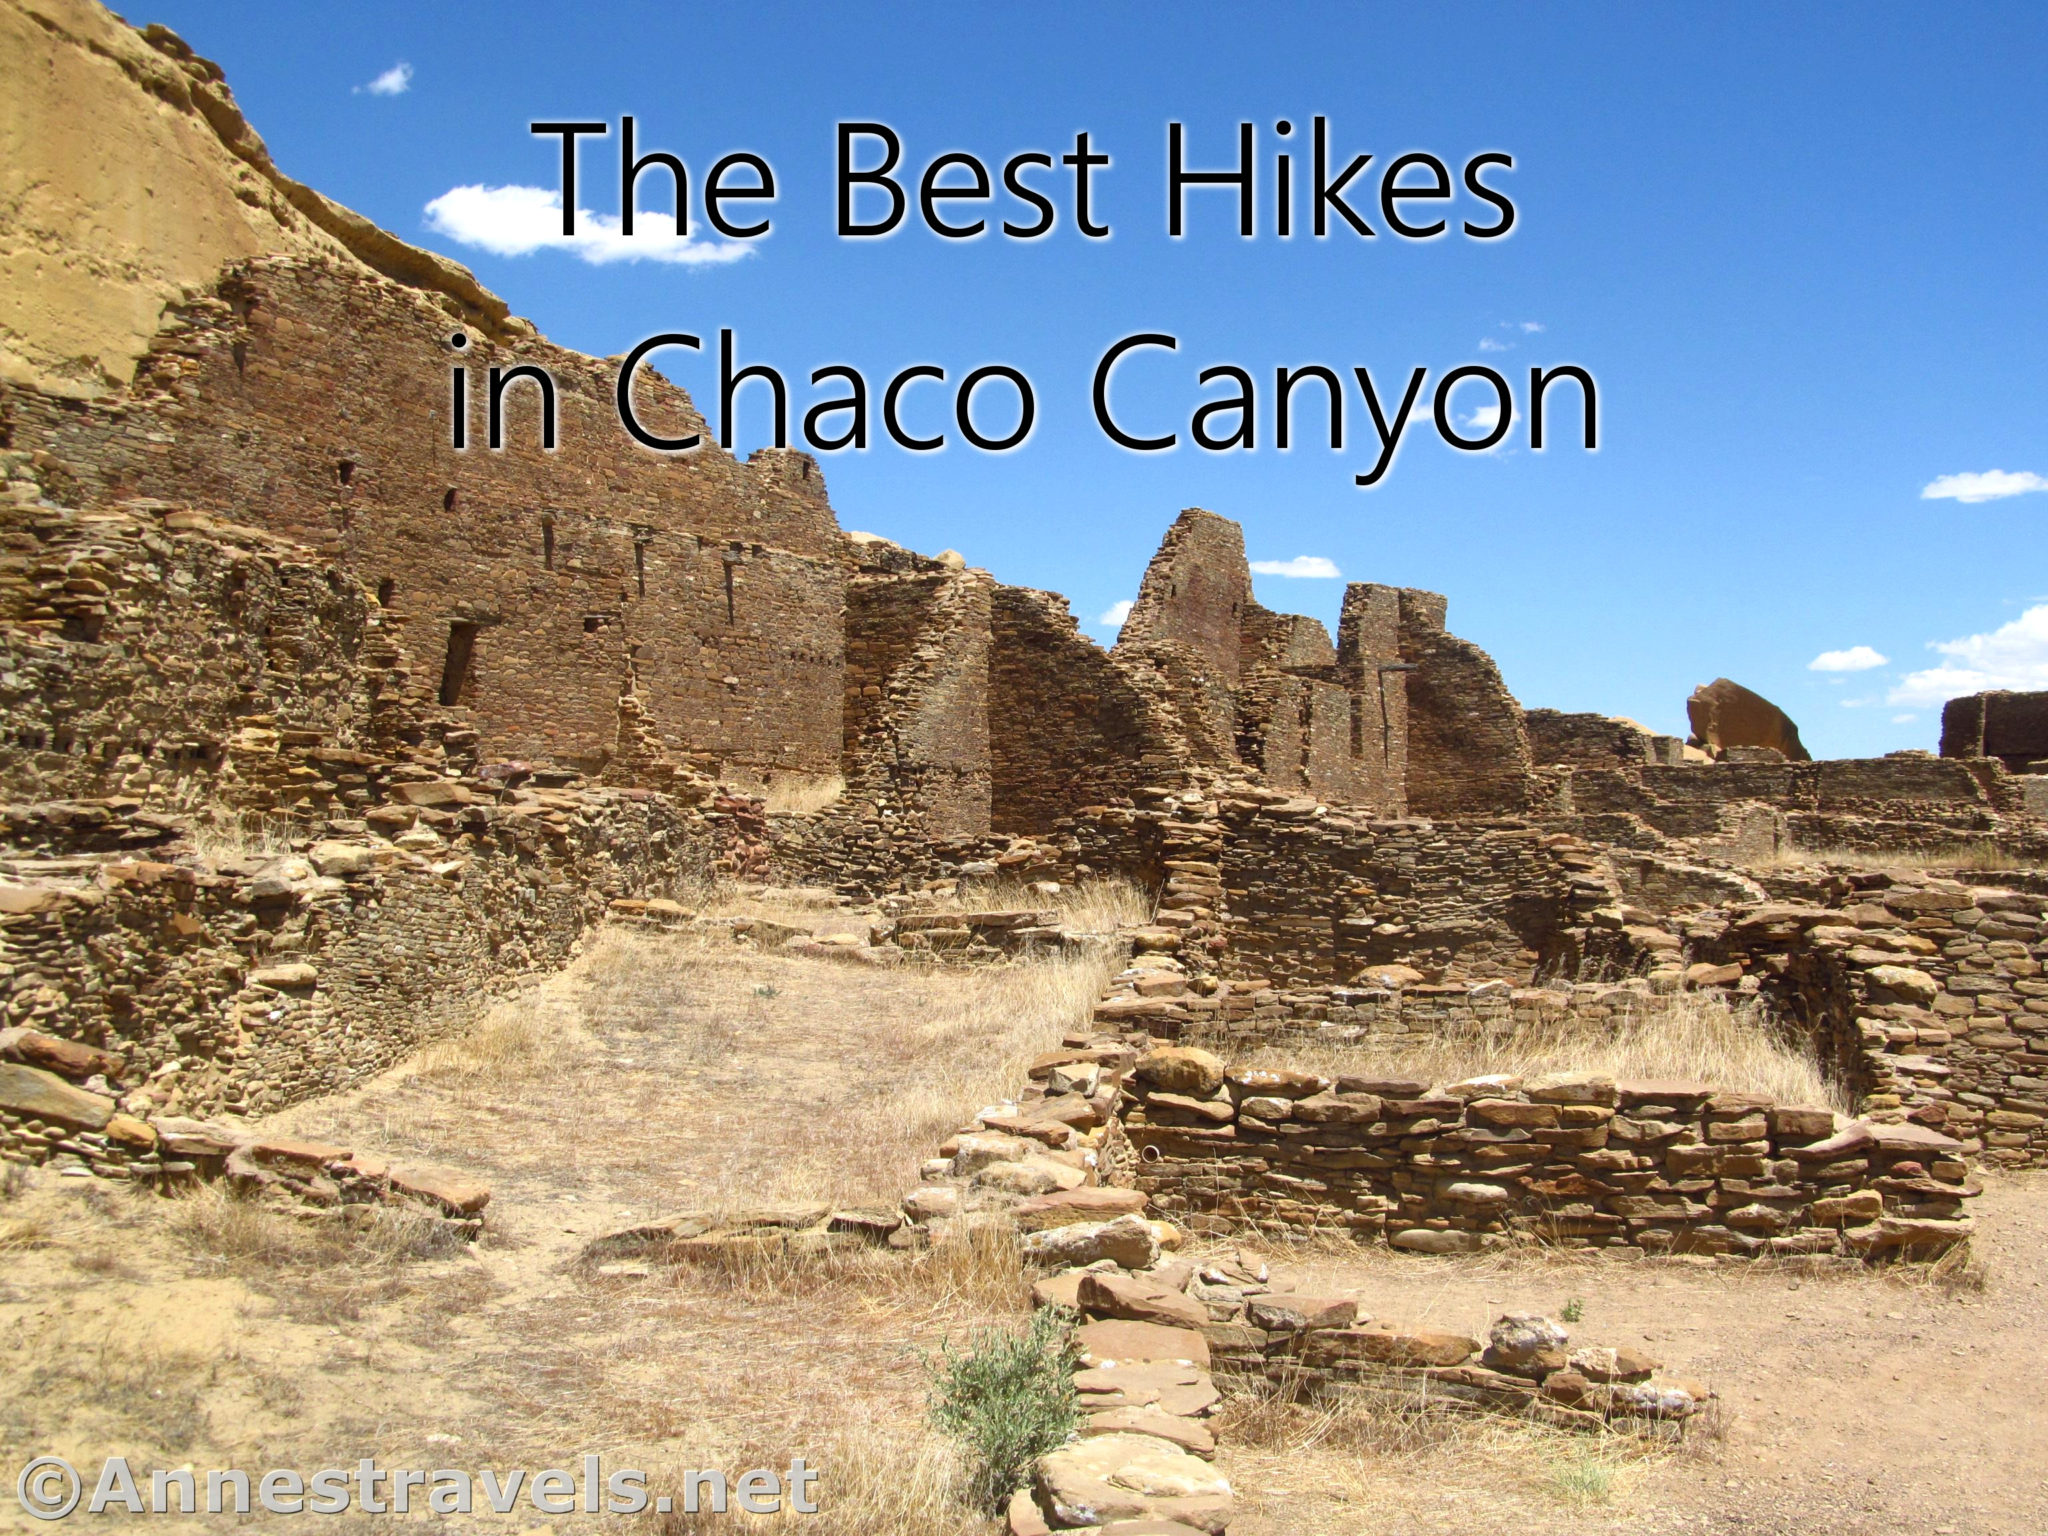 chaco canyon tour companies